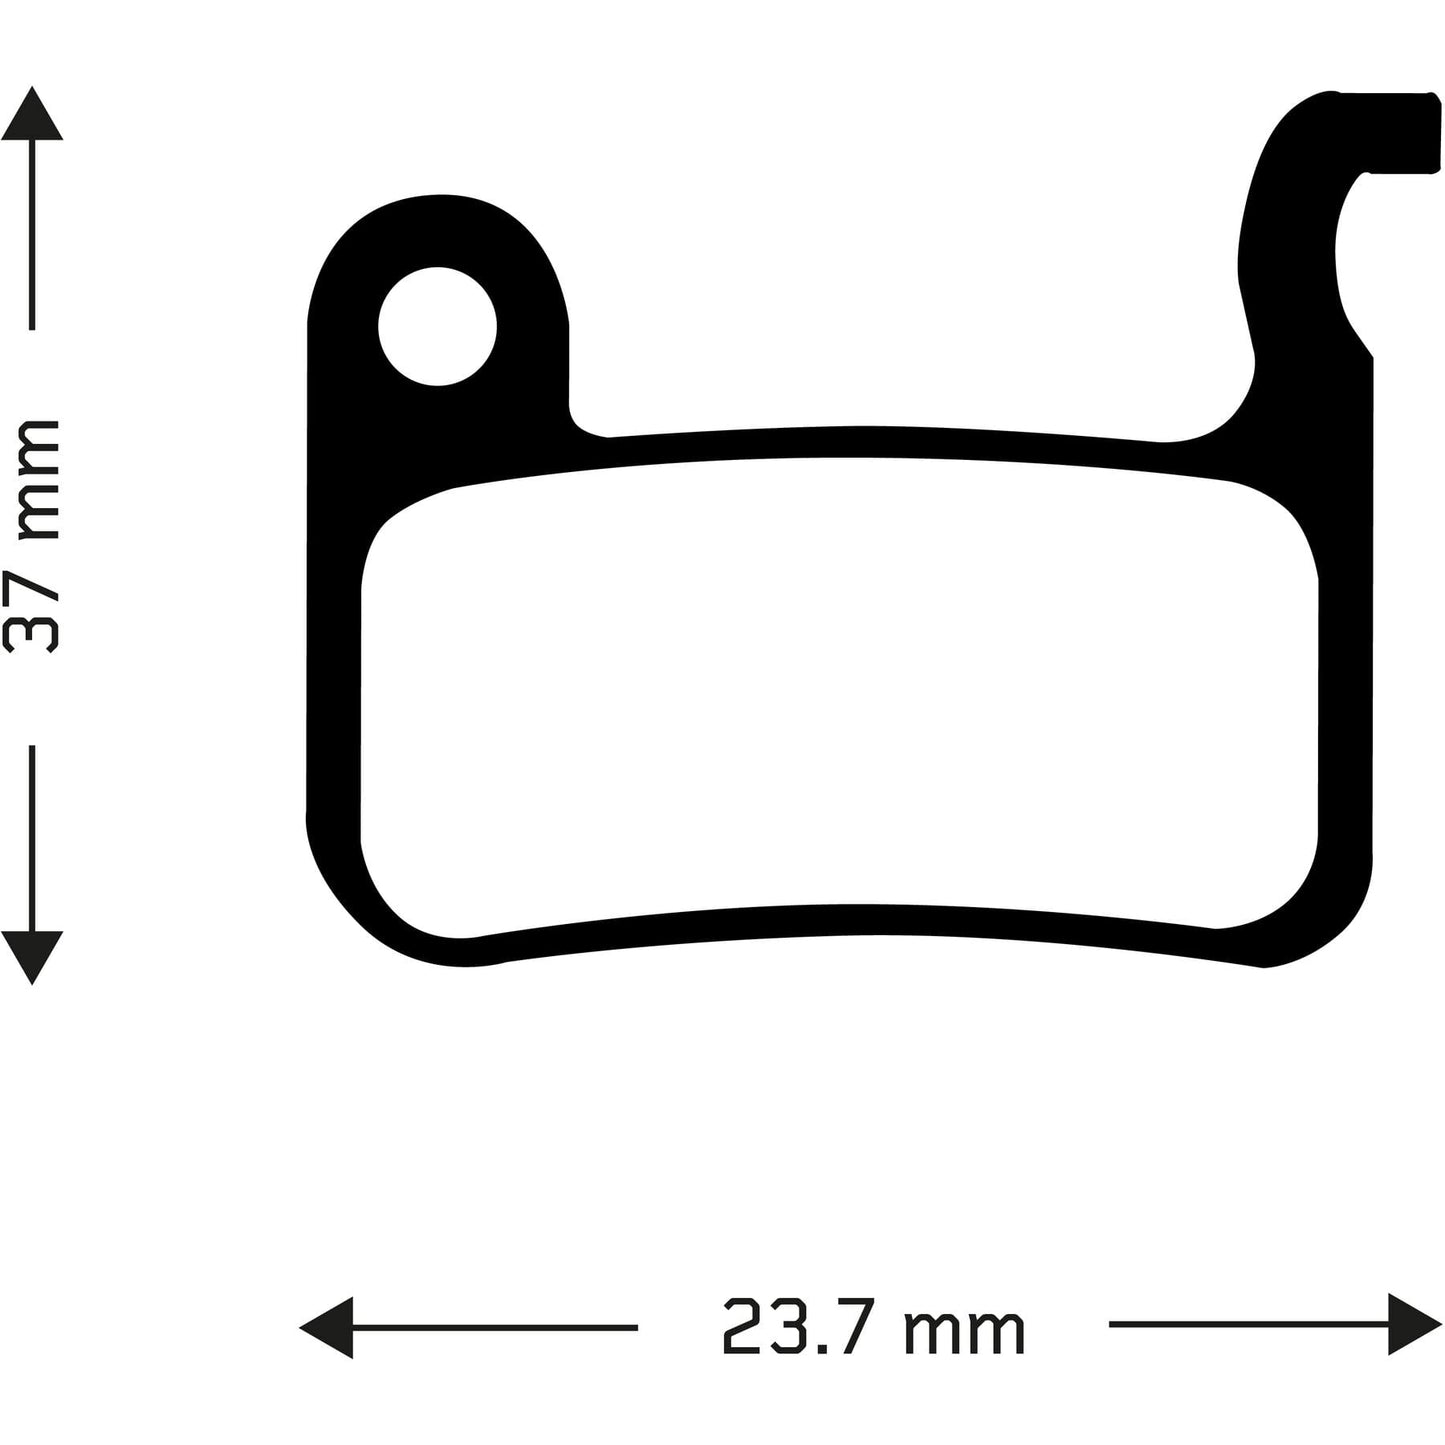 Organic Disc Brake Pads For Shimano M965 XTR / M966 Callipers